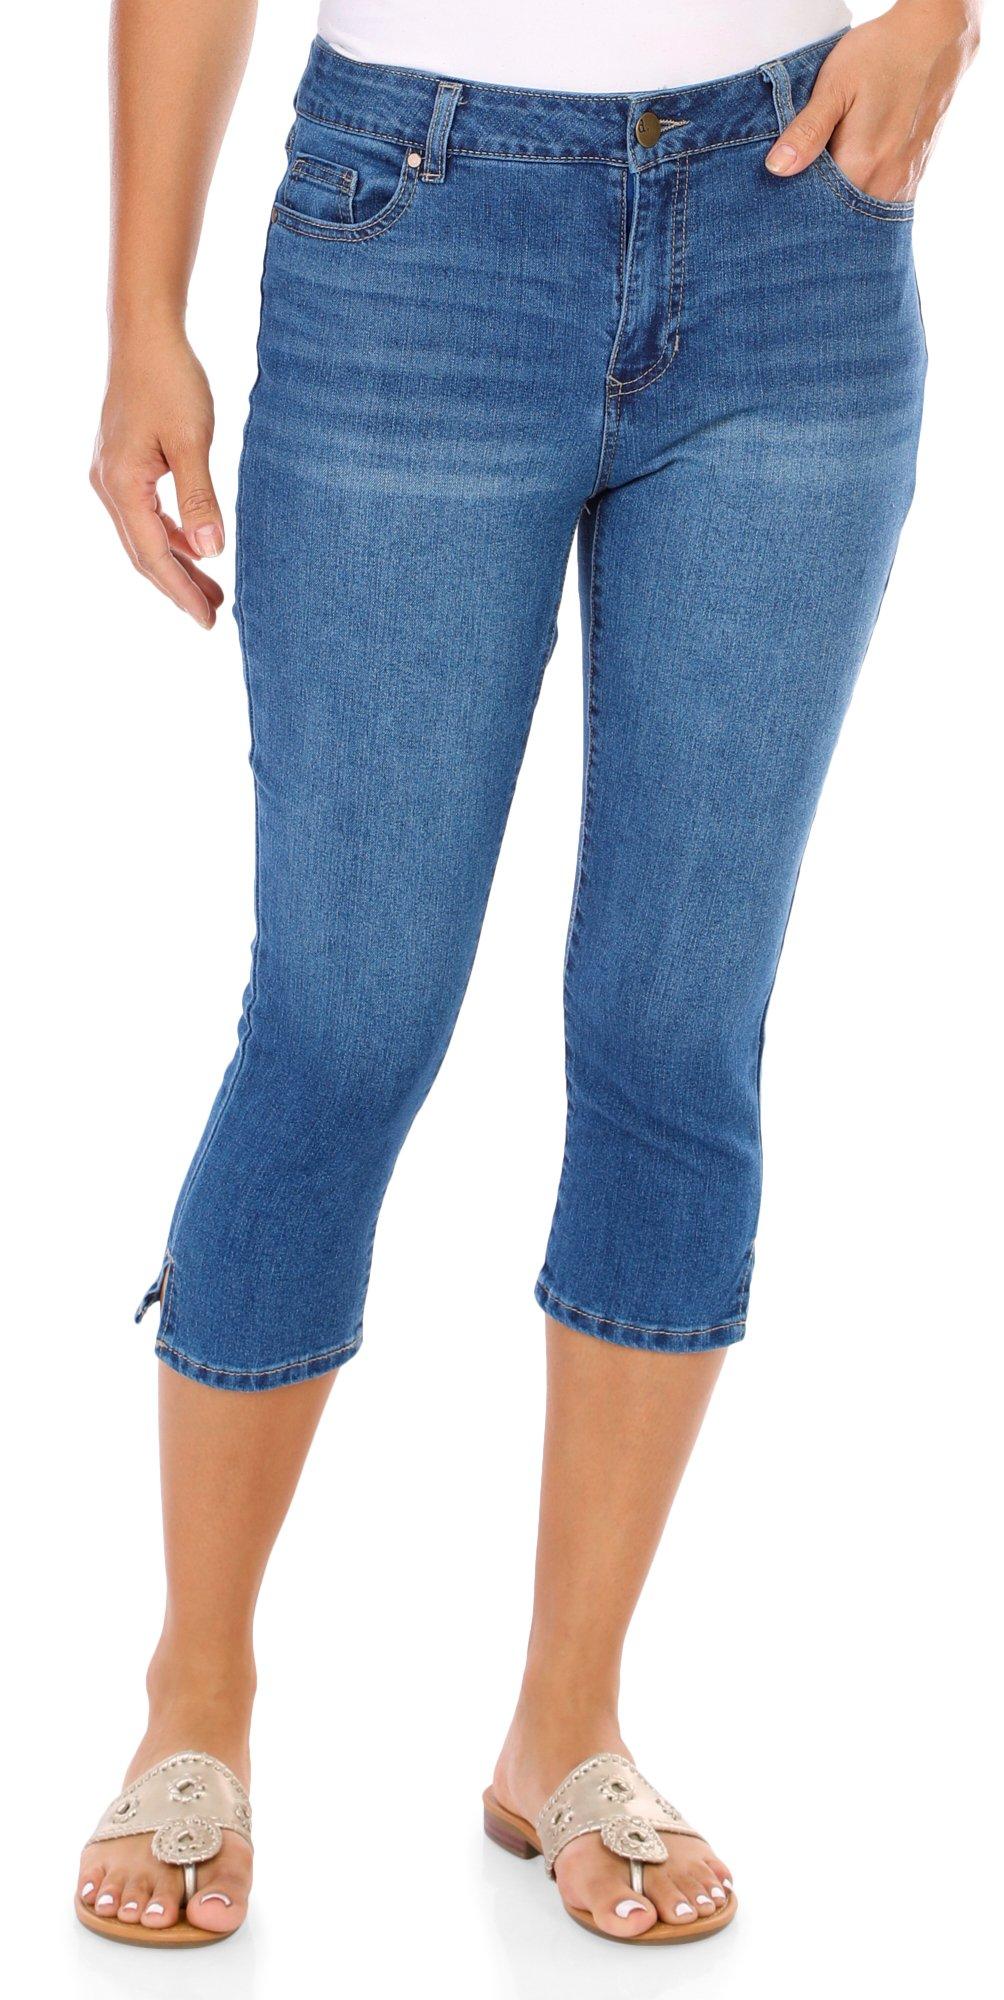 12 Wholesale Capris For Women Casual Summer Crop Pants - at 